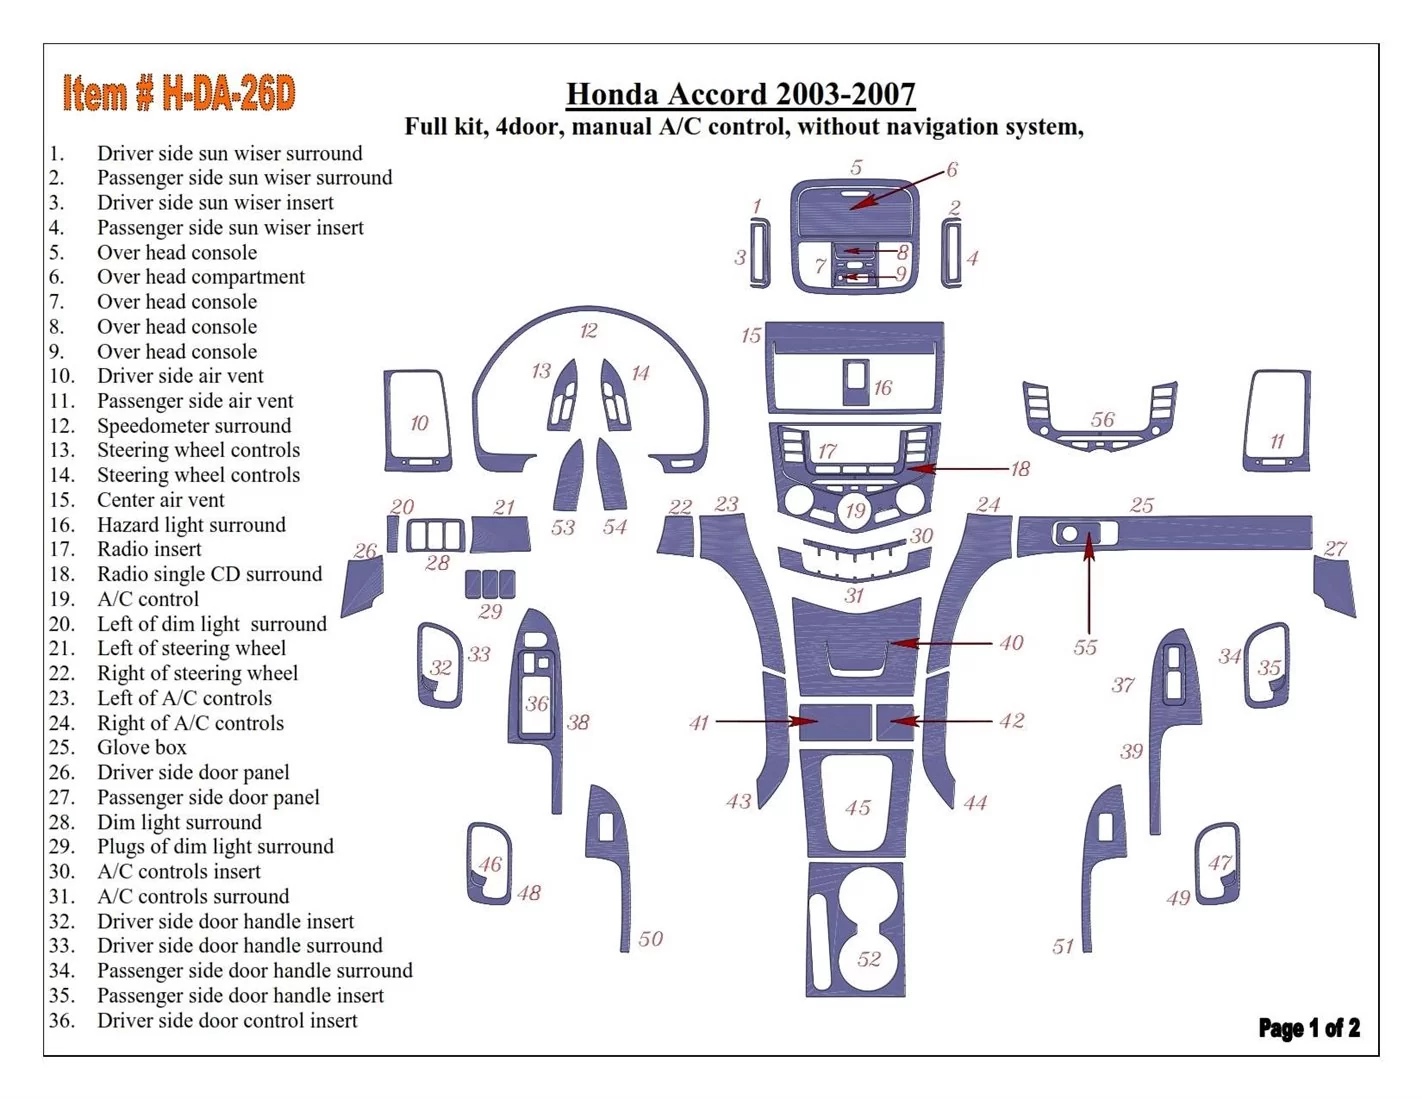 Honda Accord 2003-2007 Full Set, Manual Gearbox A/C Control, Without NAVI system, 4 Doors Decor de carlinga su interior